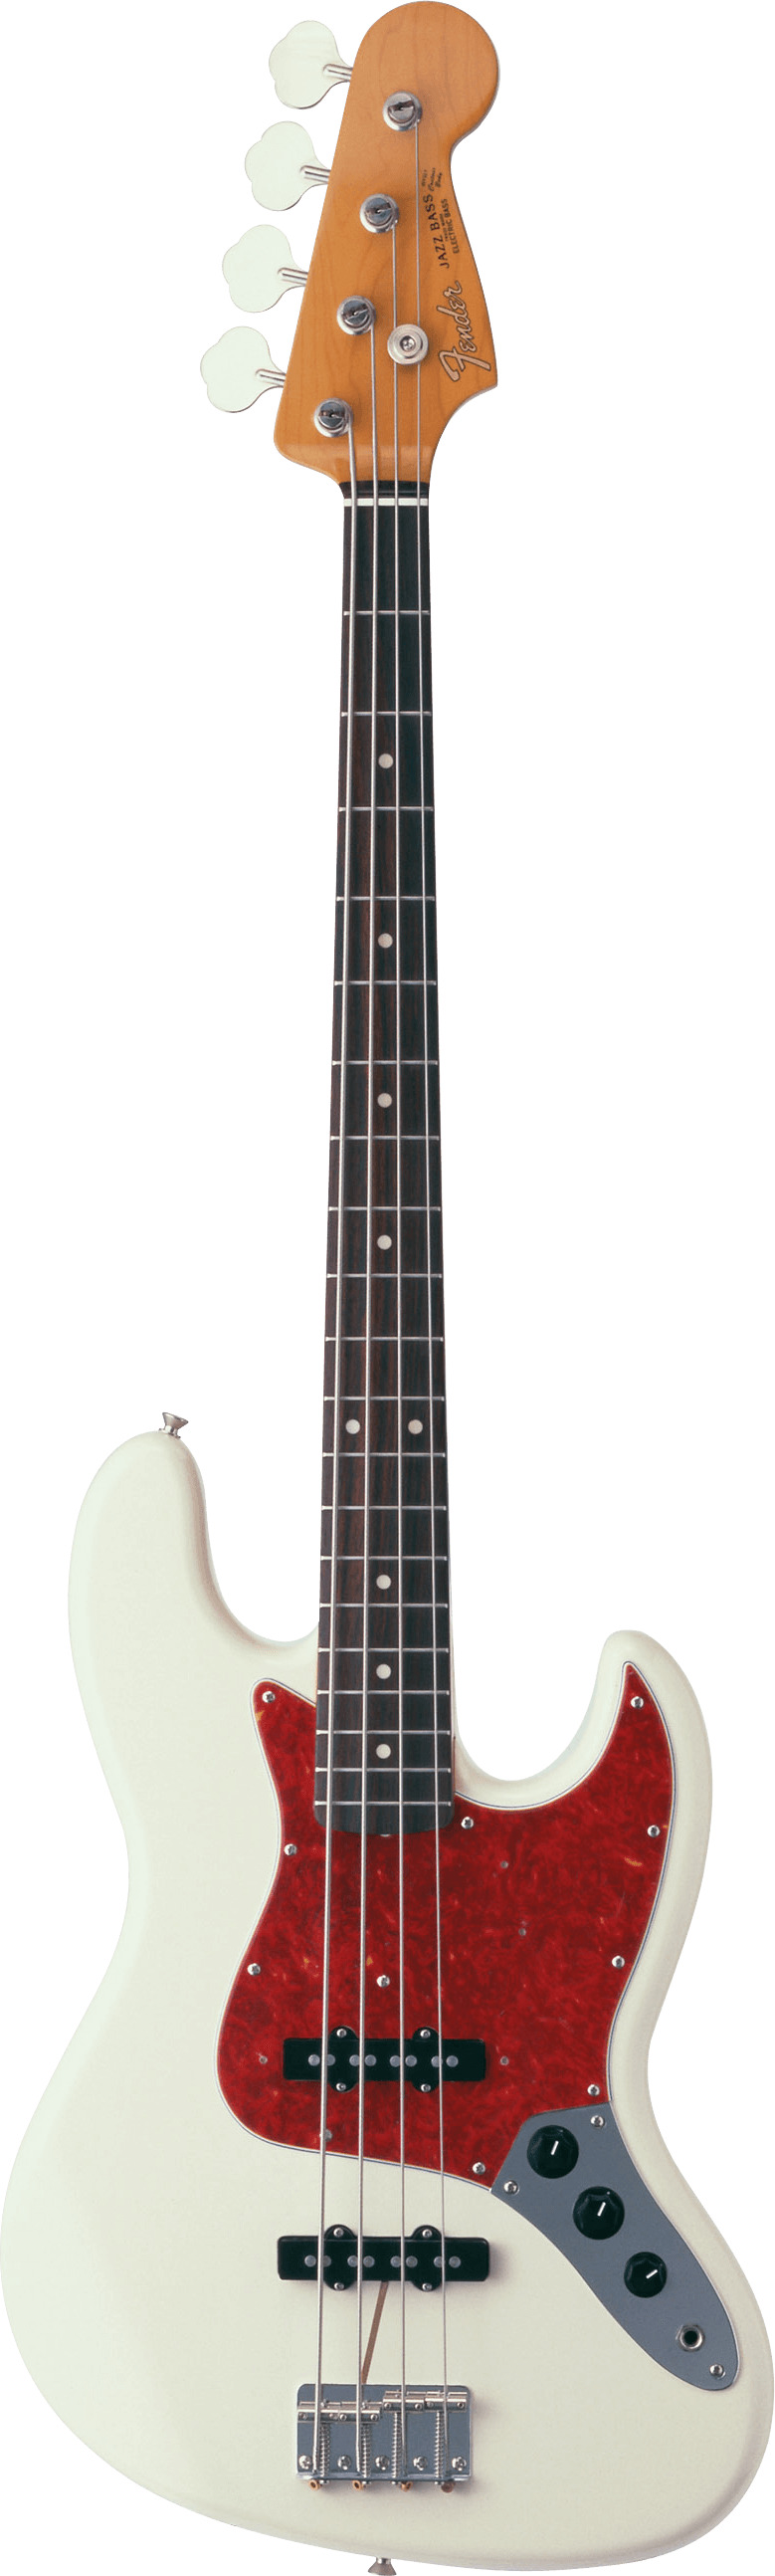 Fender Jazz Bass Guitar icons